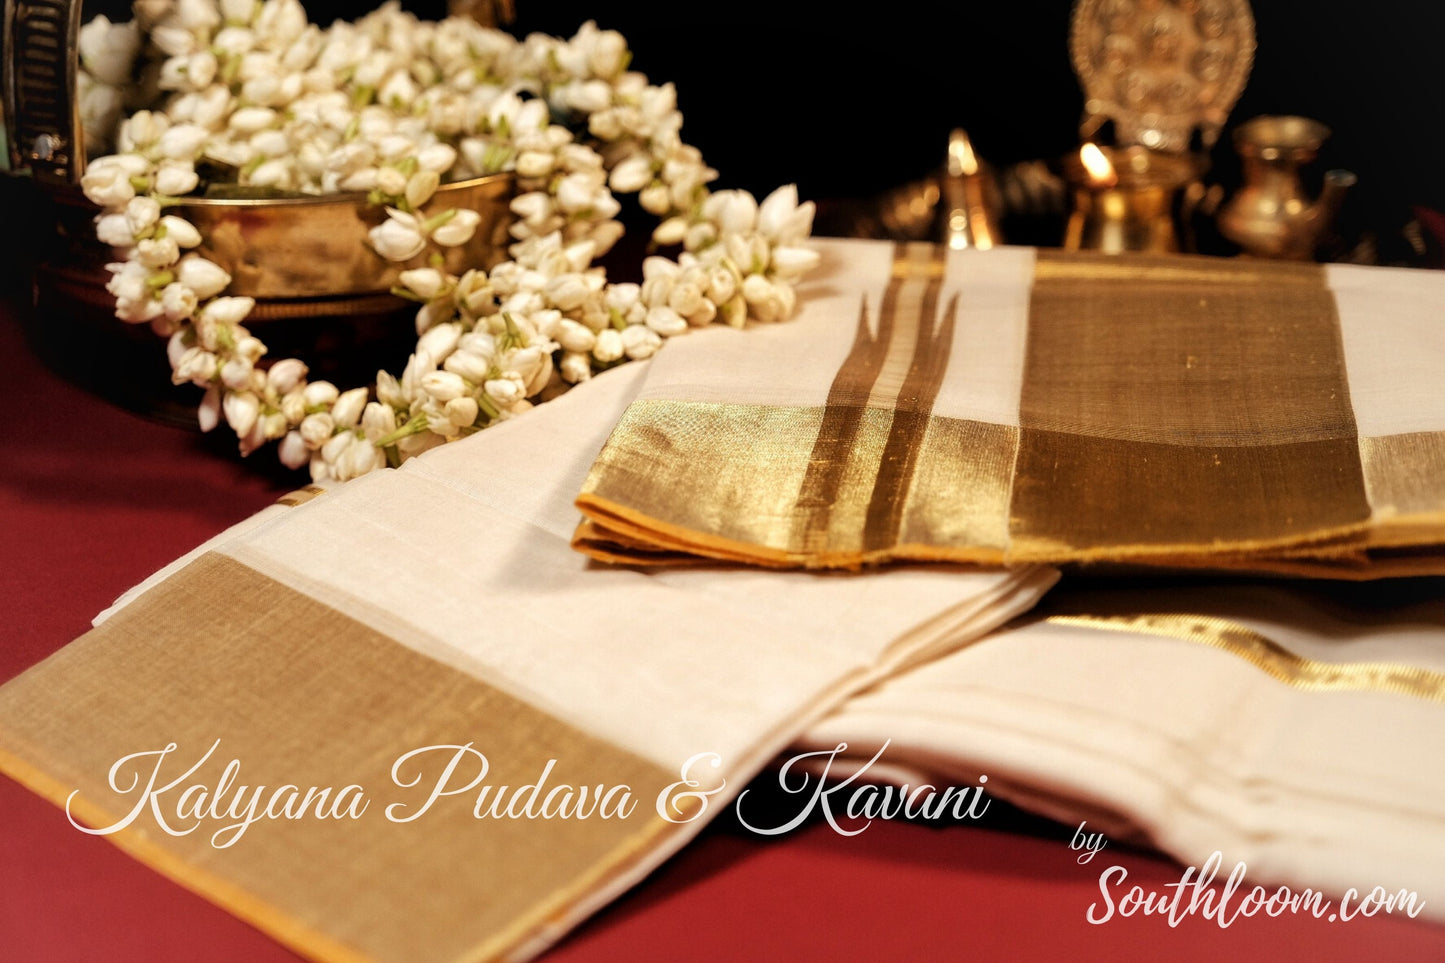 Southloom™ Kalyana Pudava and Kavani with Original Pure Kasavu Handwoven at Balaramapuram / പുടവയും കവണിയും